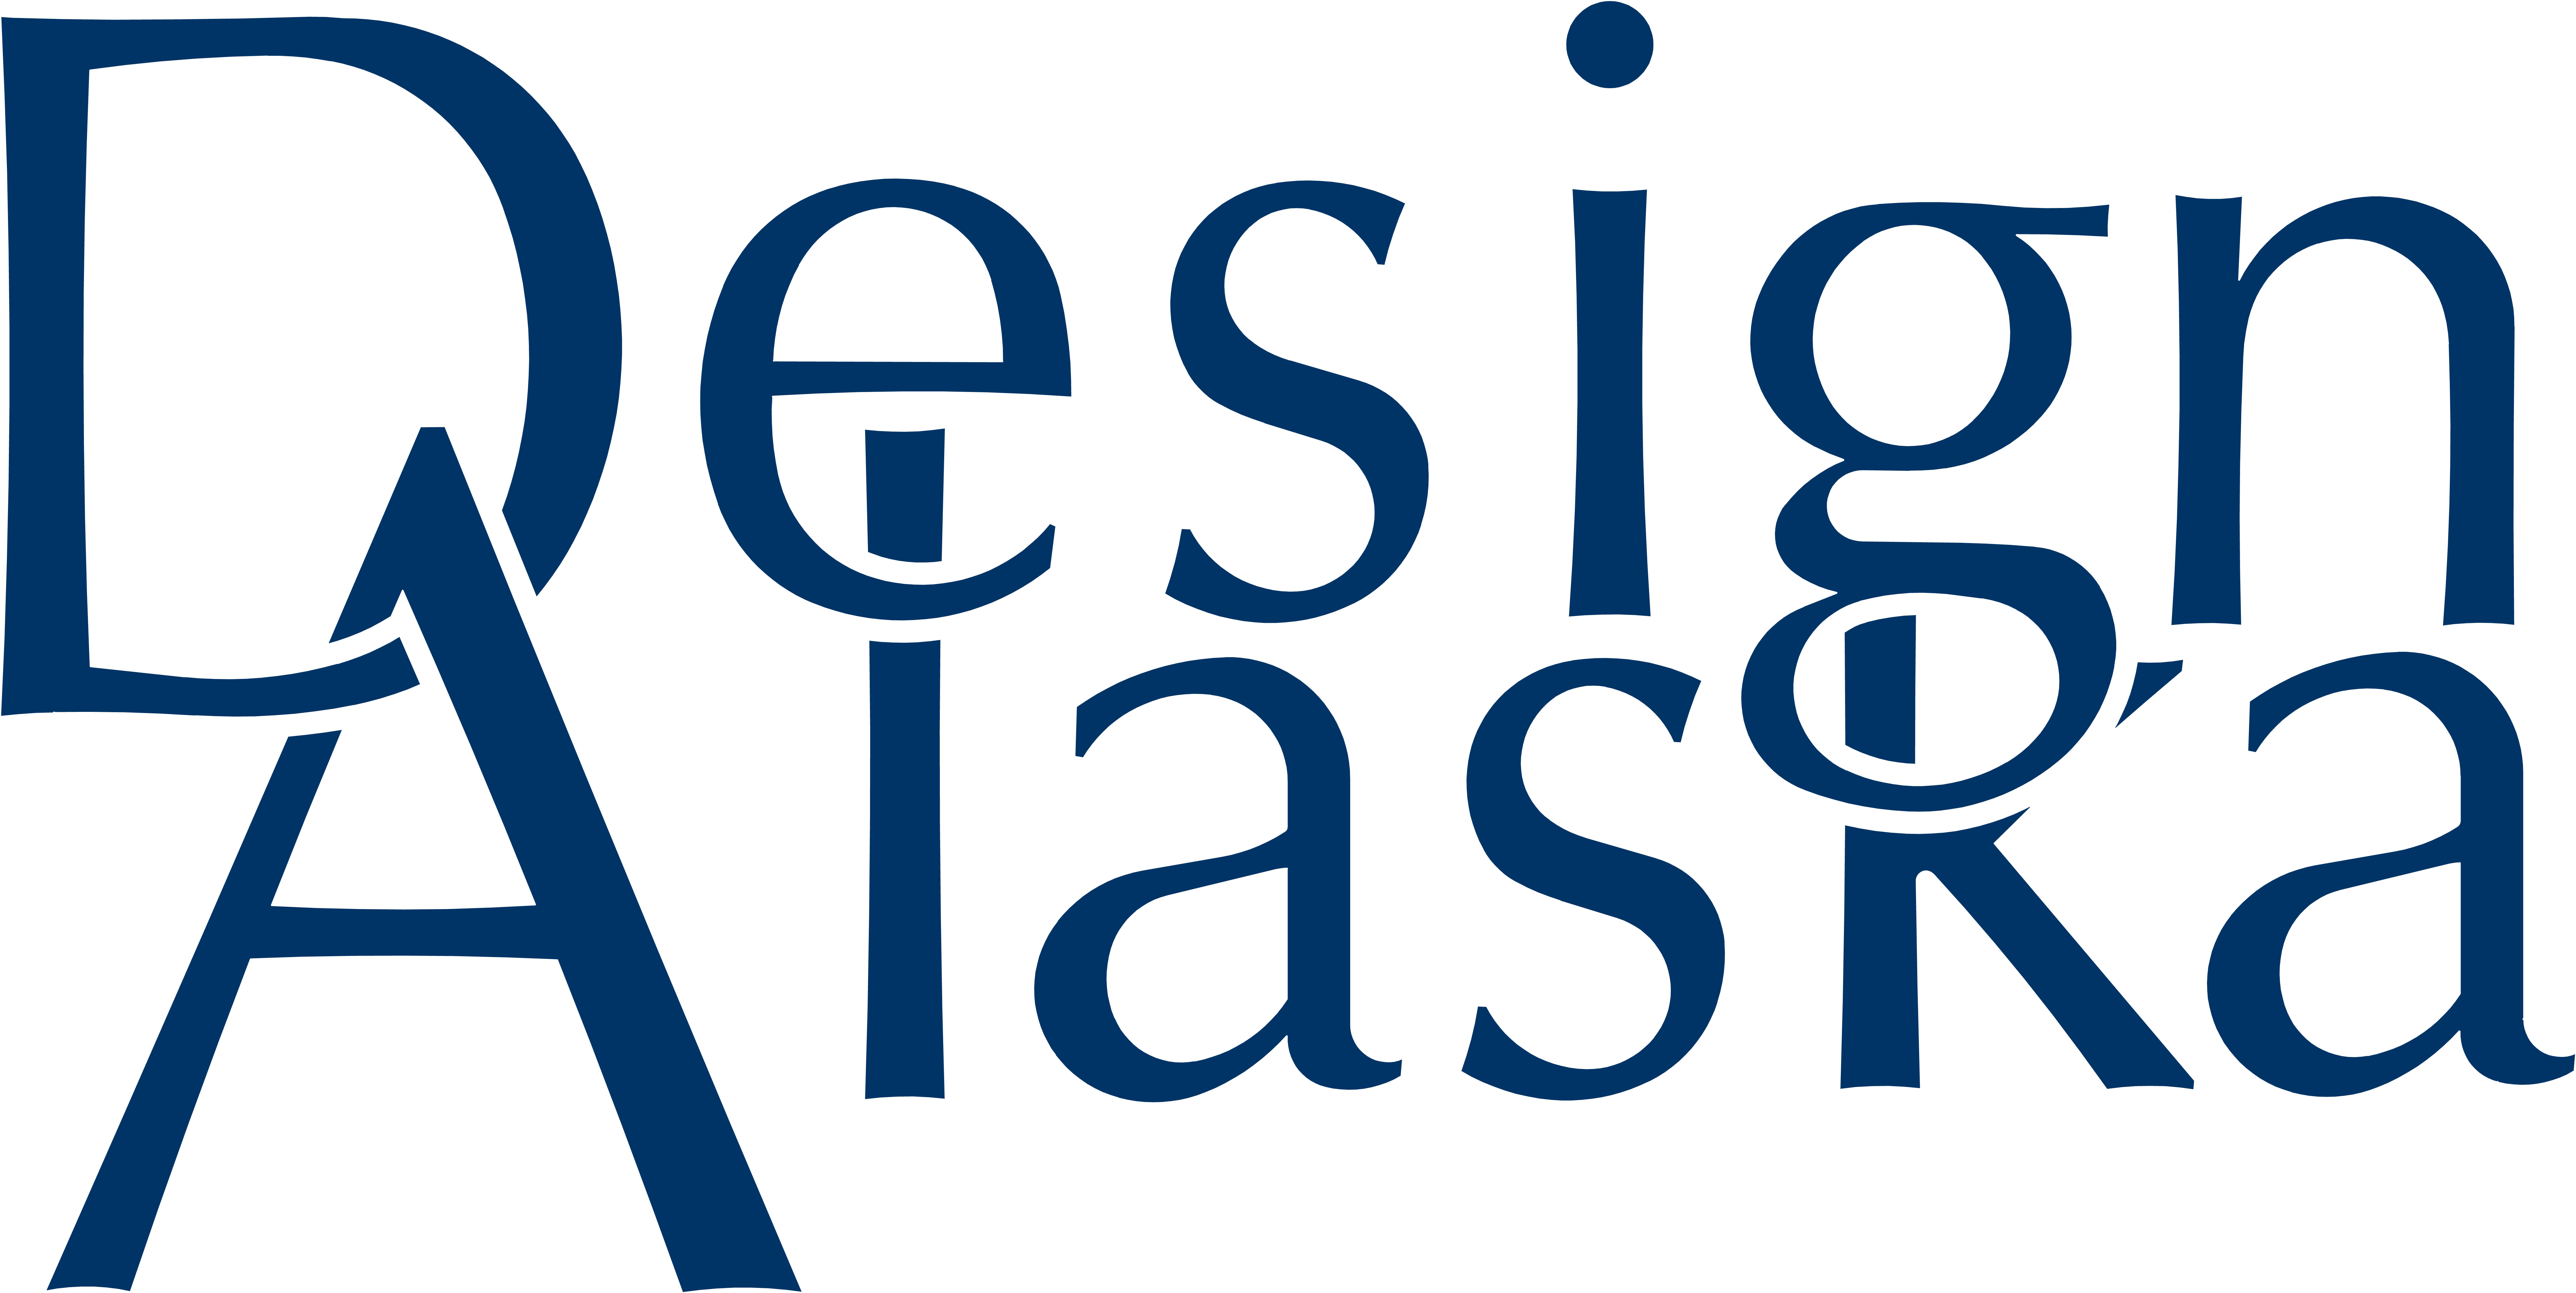 Design Alaska logo